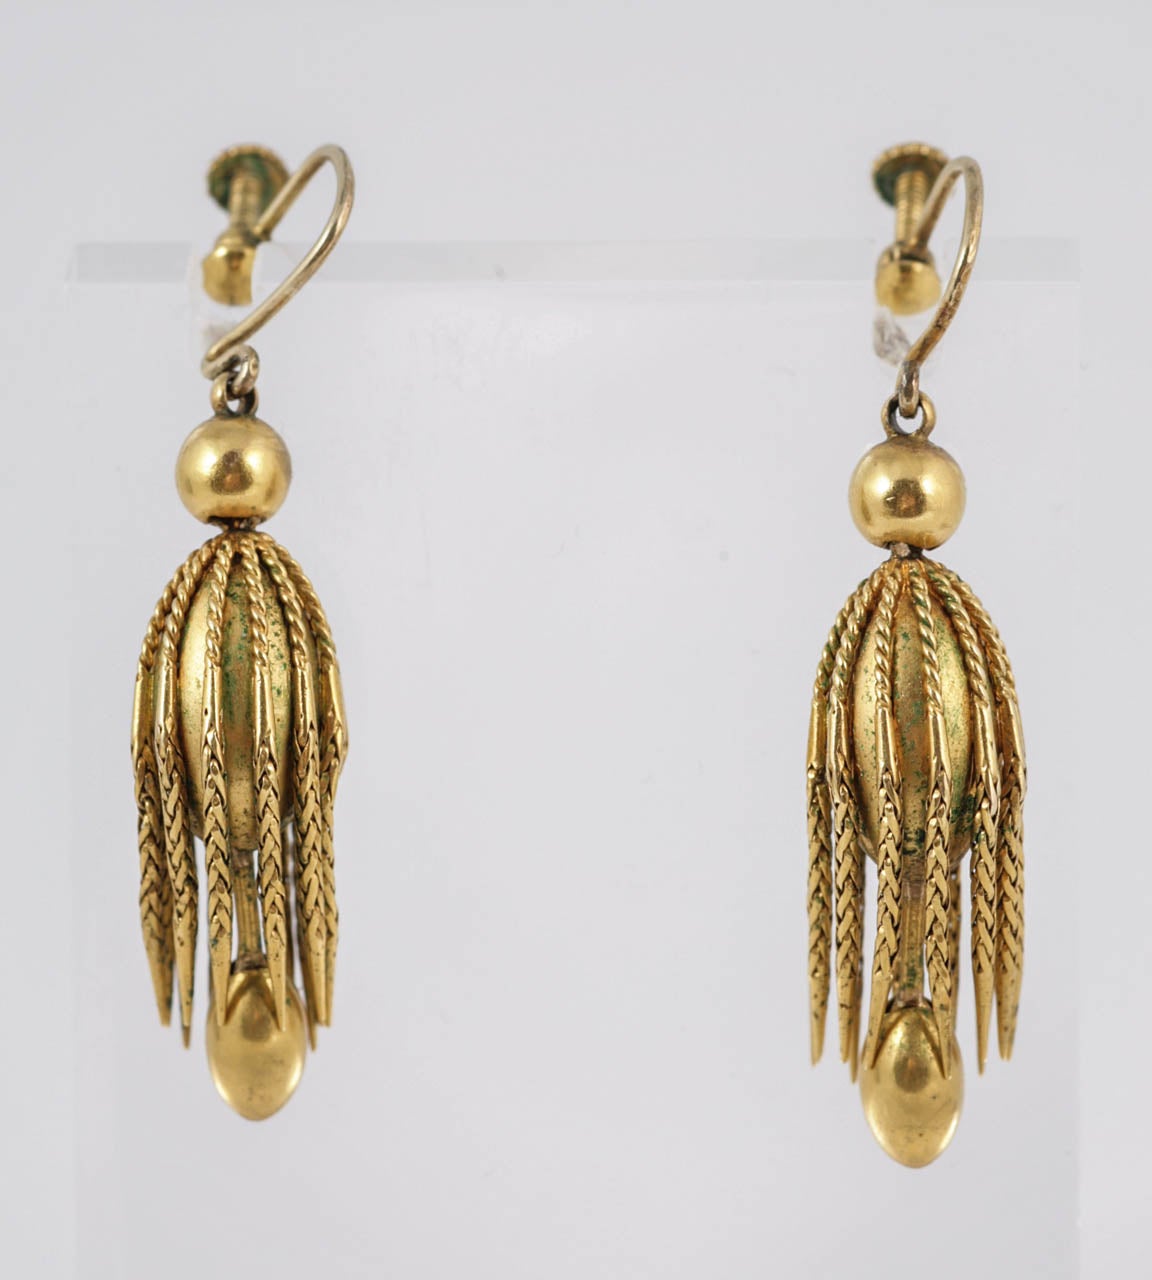 Victorian 3 dimensional tassel earrings in 15K Gold with screw fittings.